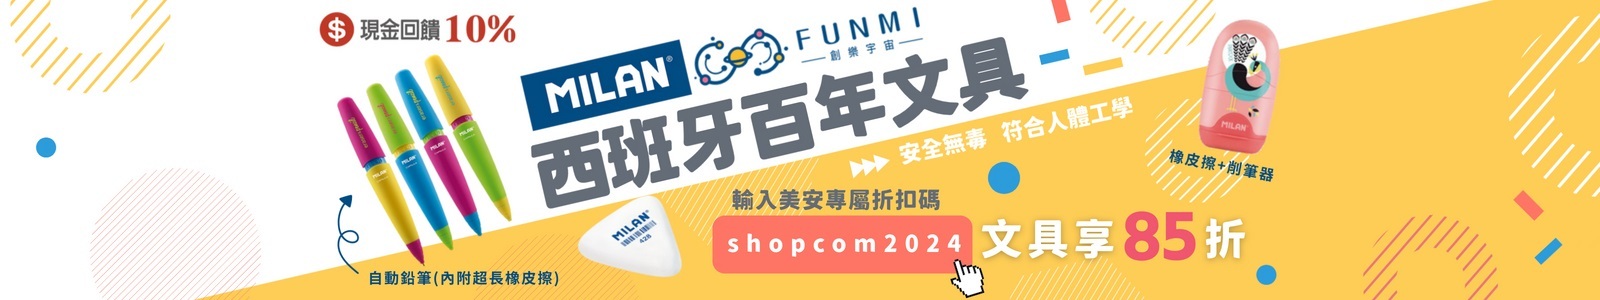 Funmi 創樂宇宙，現金回饋10%，FUNMI開學超優惠!!! 輸入美安獨家折扣碼shopcom2024，立即享MILAN文具85折。 